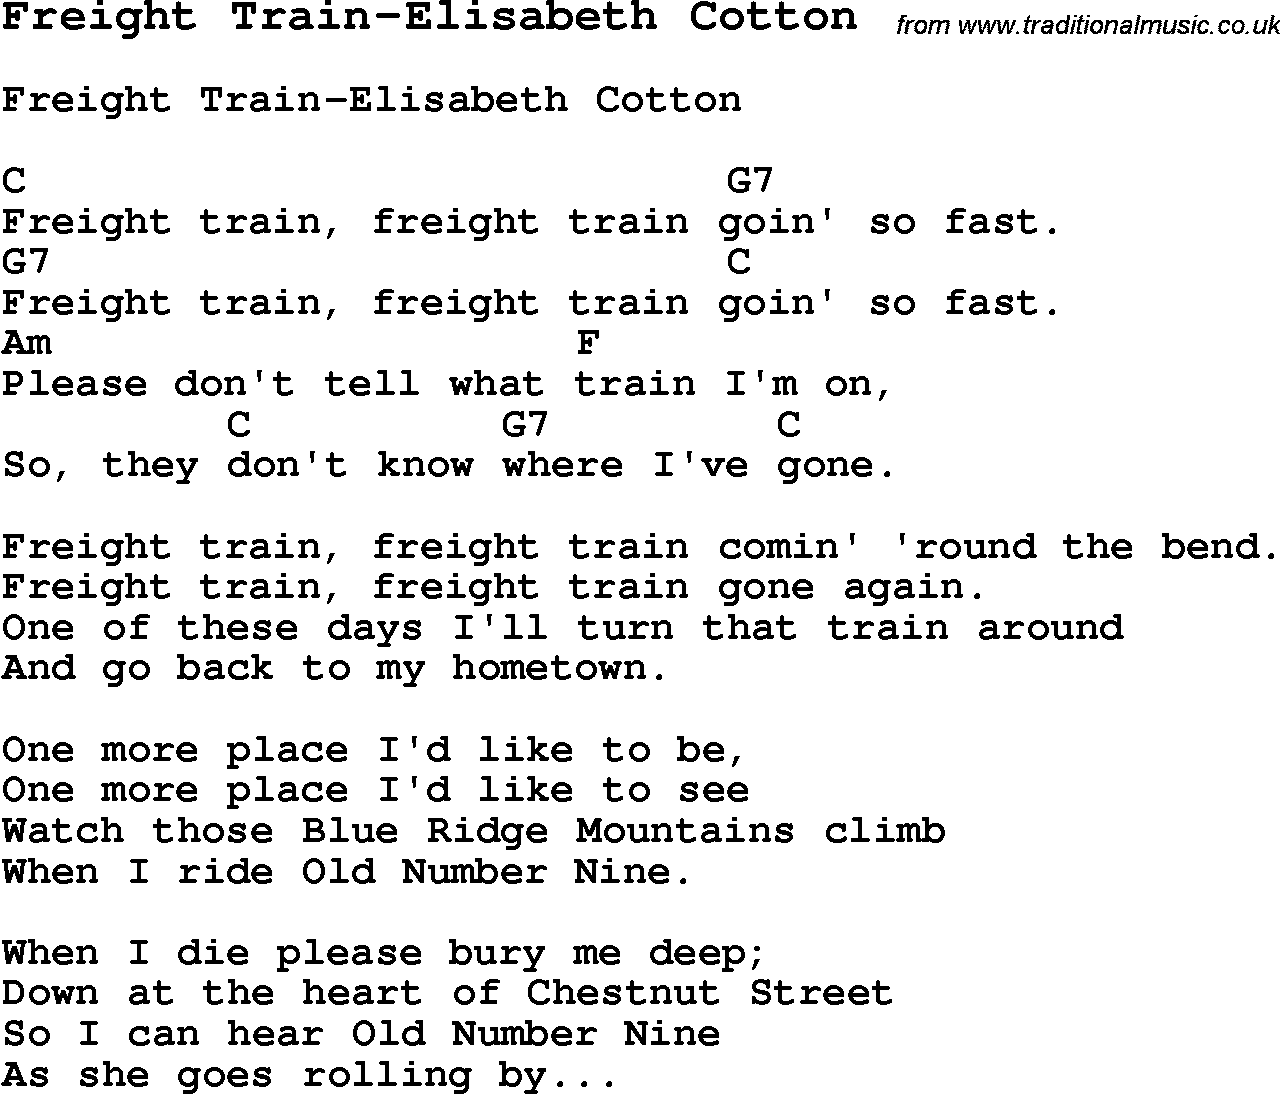 Summer-Camp Song, Freight Train-Elisabeth Cotton, with lyrics and chords for Ukulele, Guitar Banjo etc.